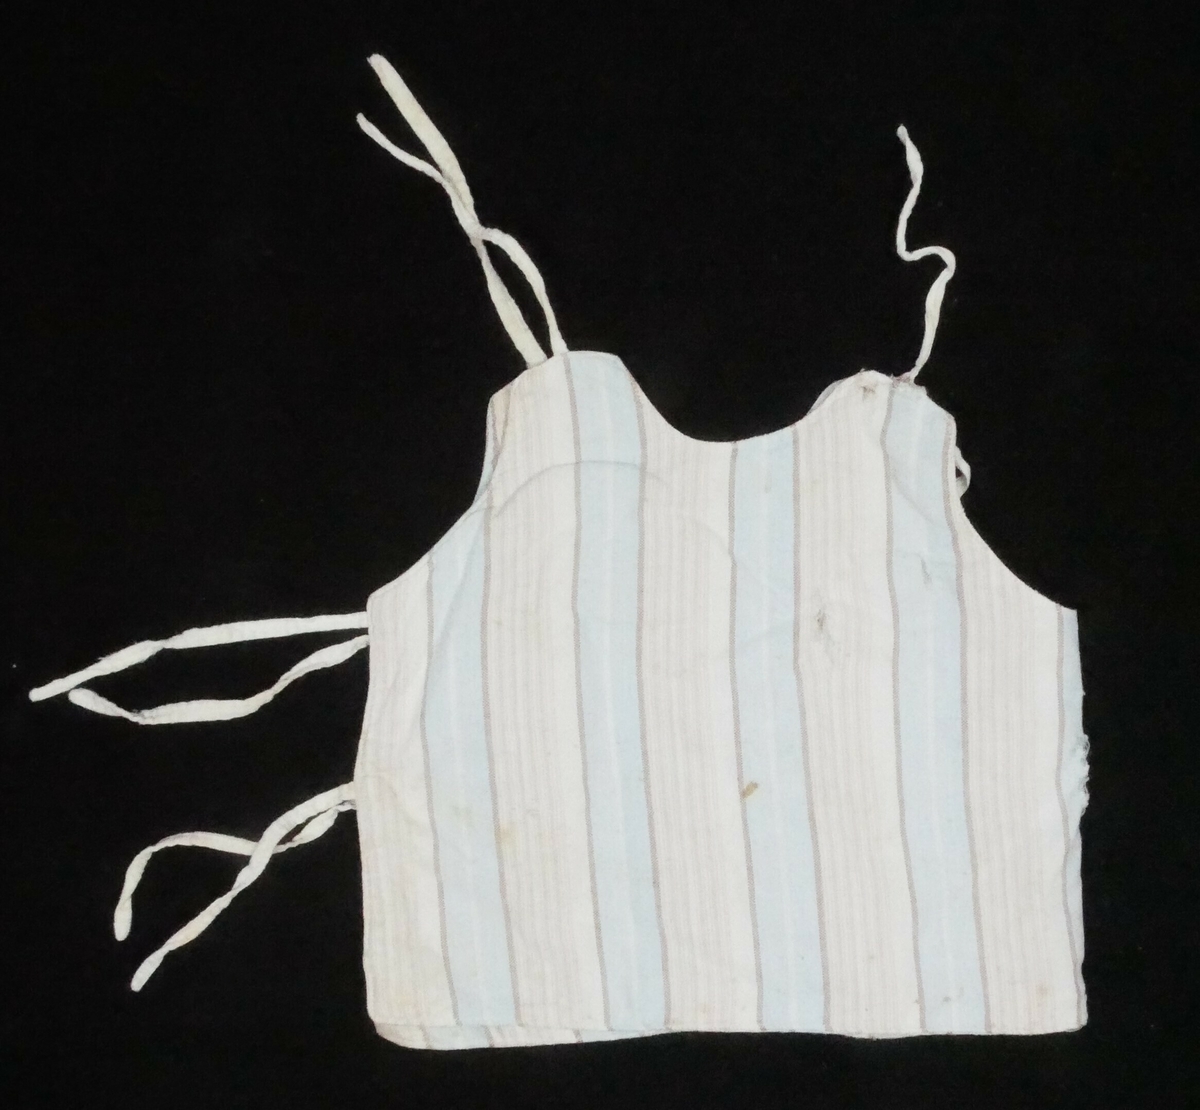 Ermelaus skjorte med rund hals og fire tråder til knyting i siden og på skuldrene. 